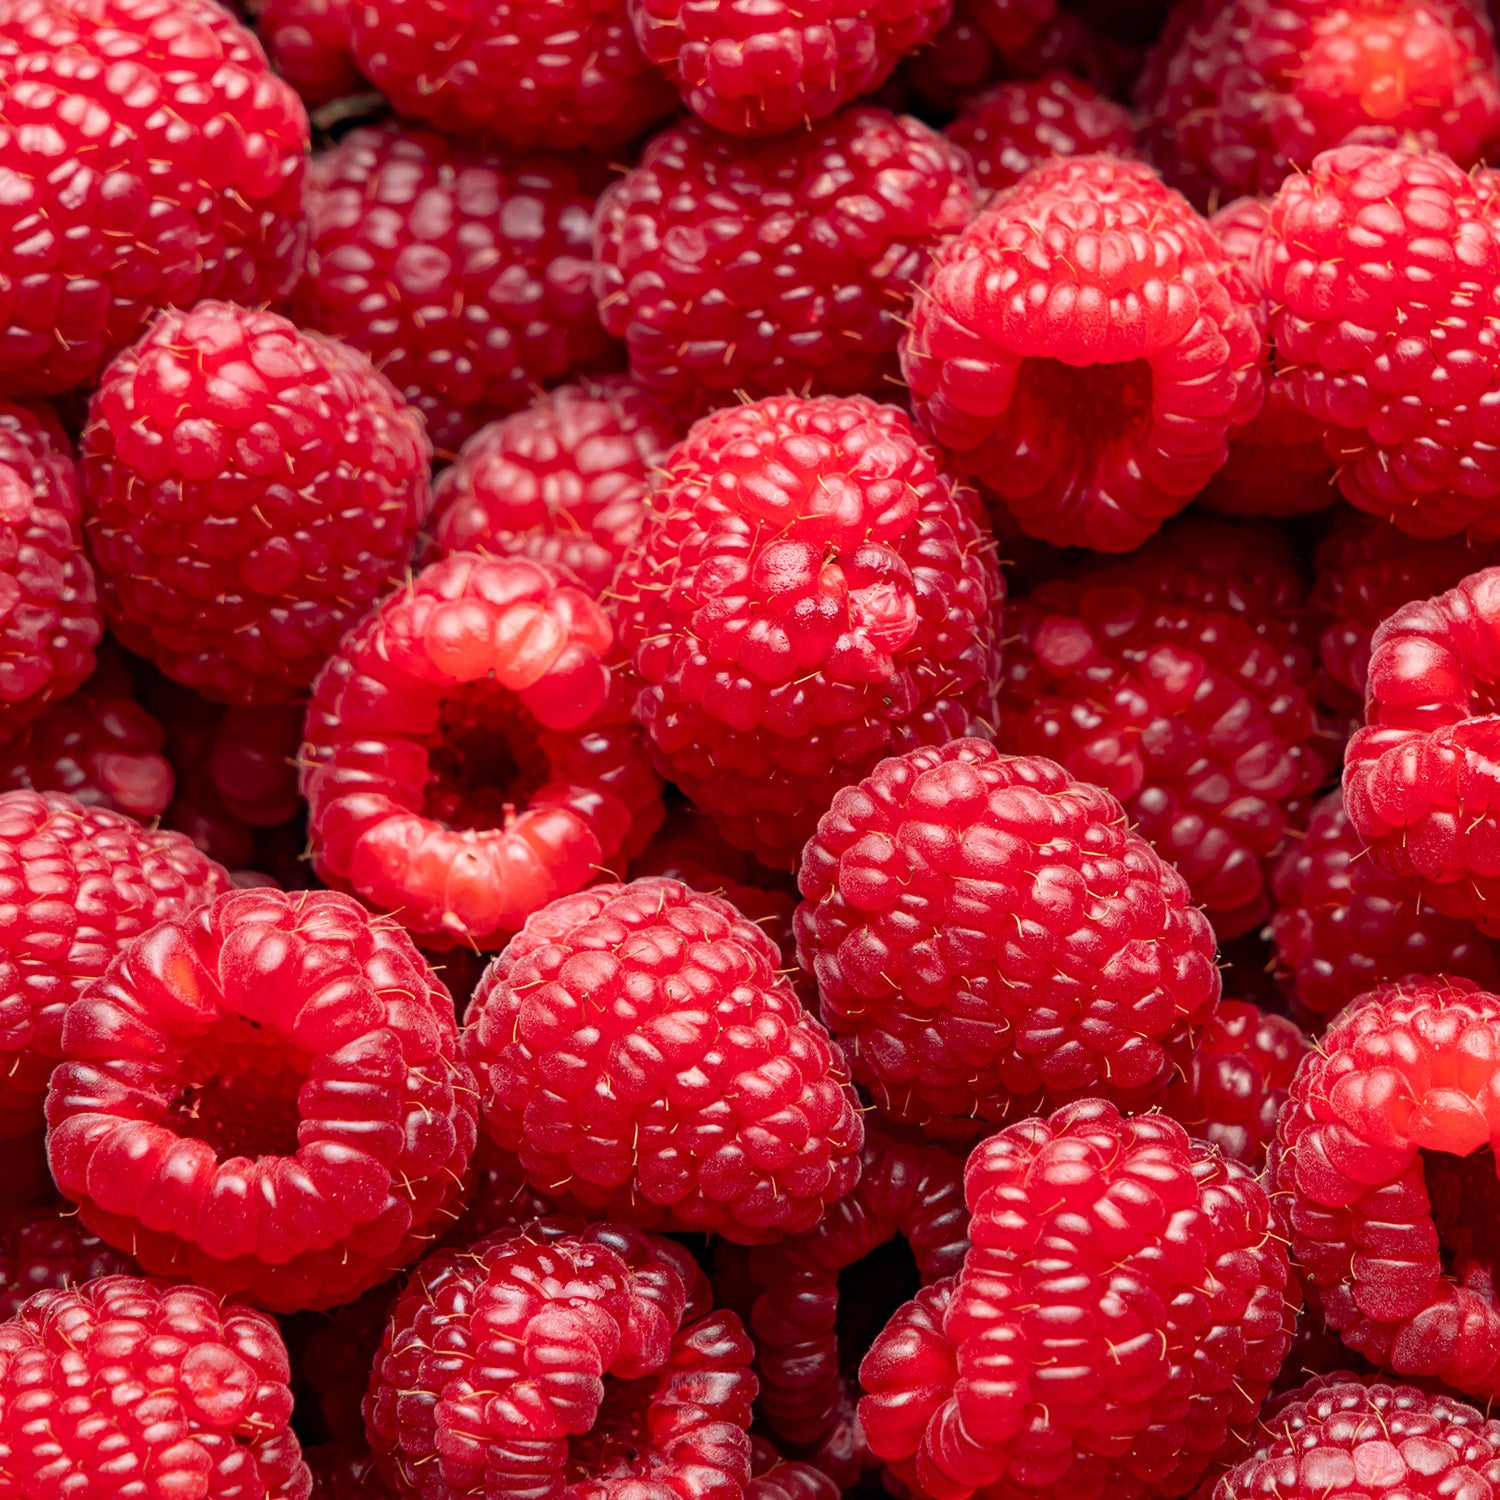 4 Raspberry Skin Benefits